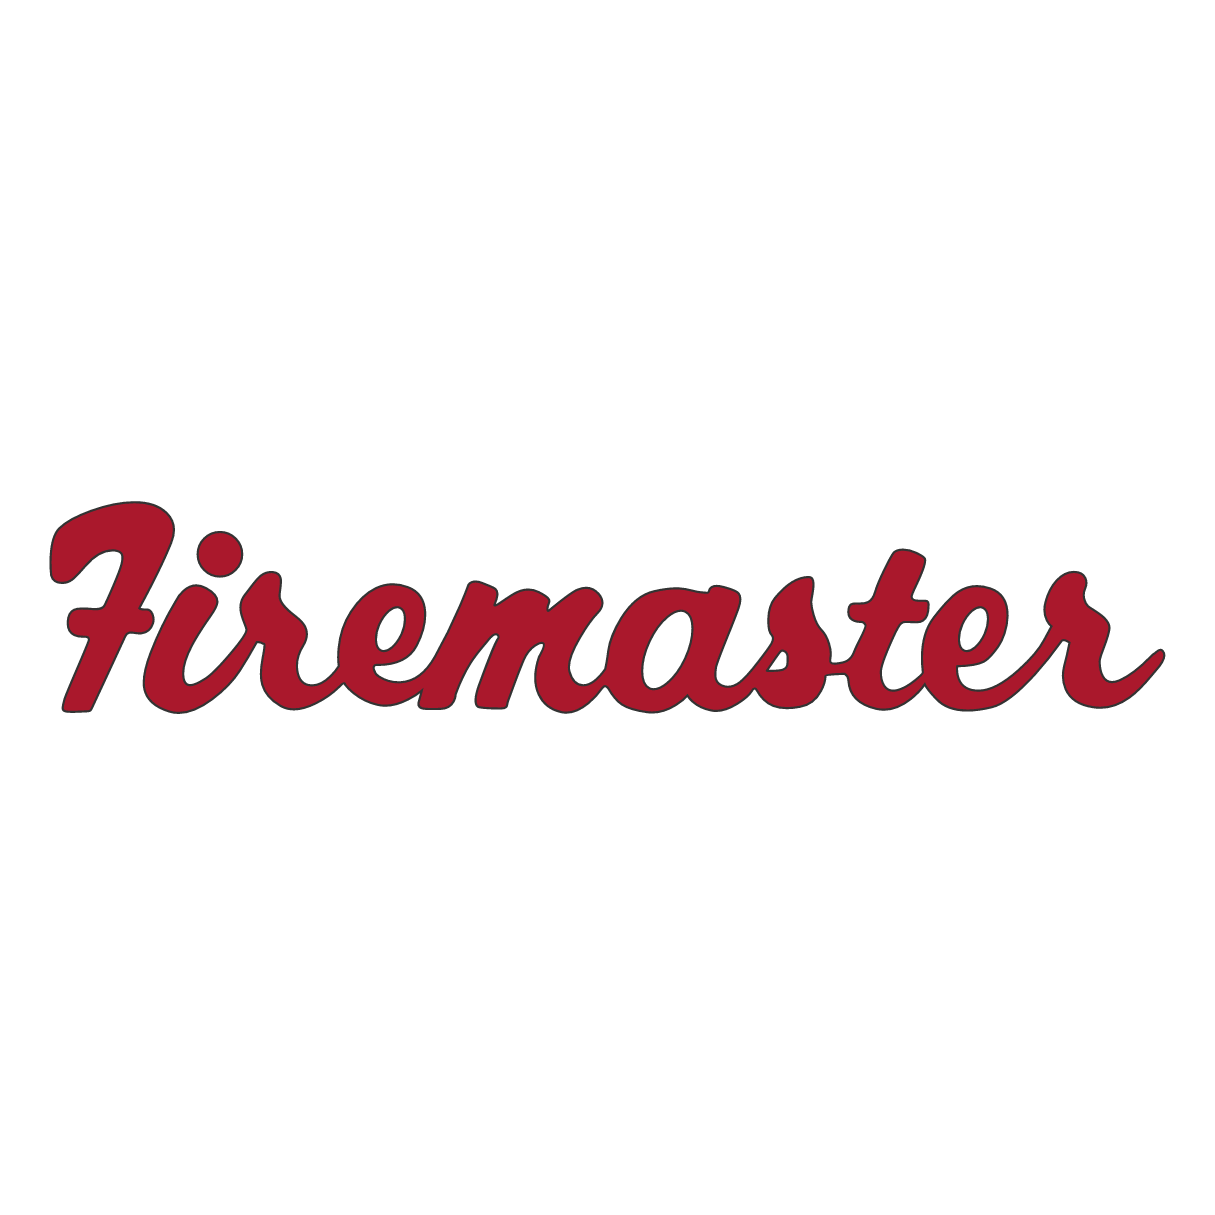 firemaster.png